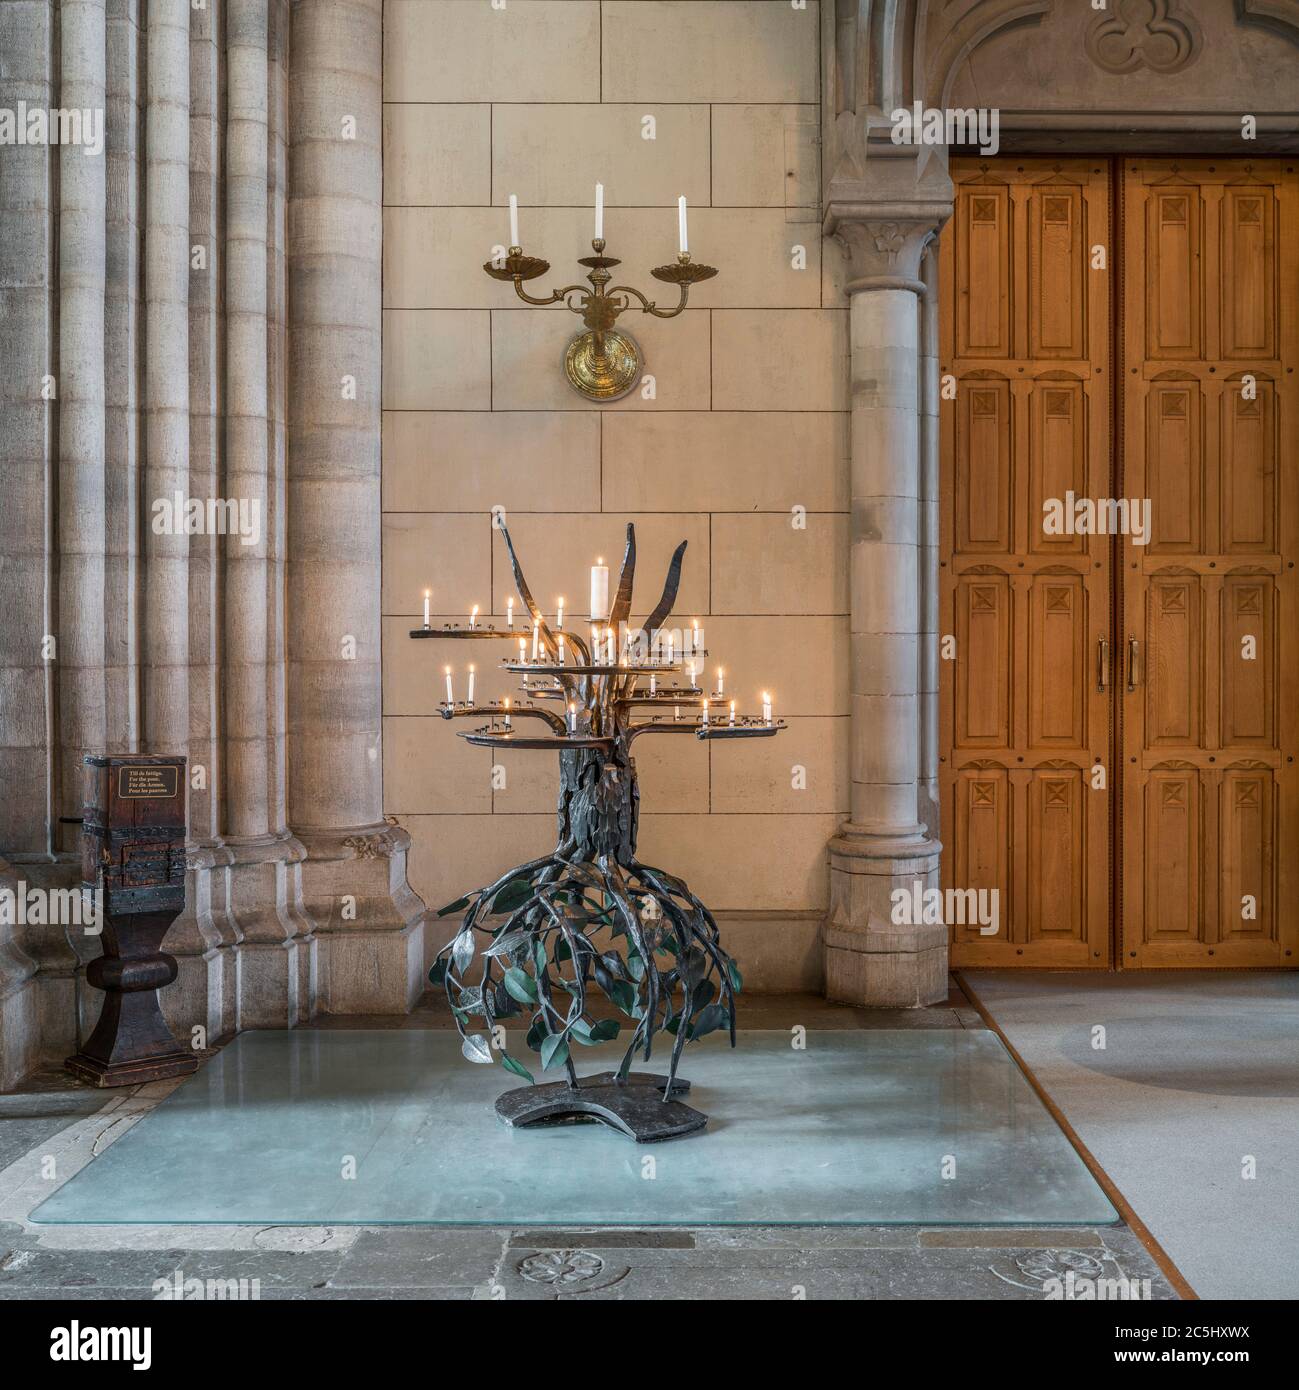 Lit candles. Interior of the Uppsala Cathedral (Domkyrka). Uppsala, Sweden, Scandinavia. Stock Photo